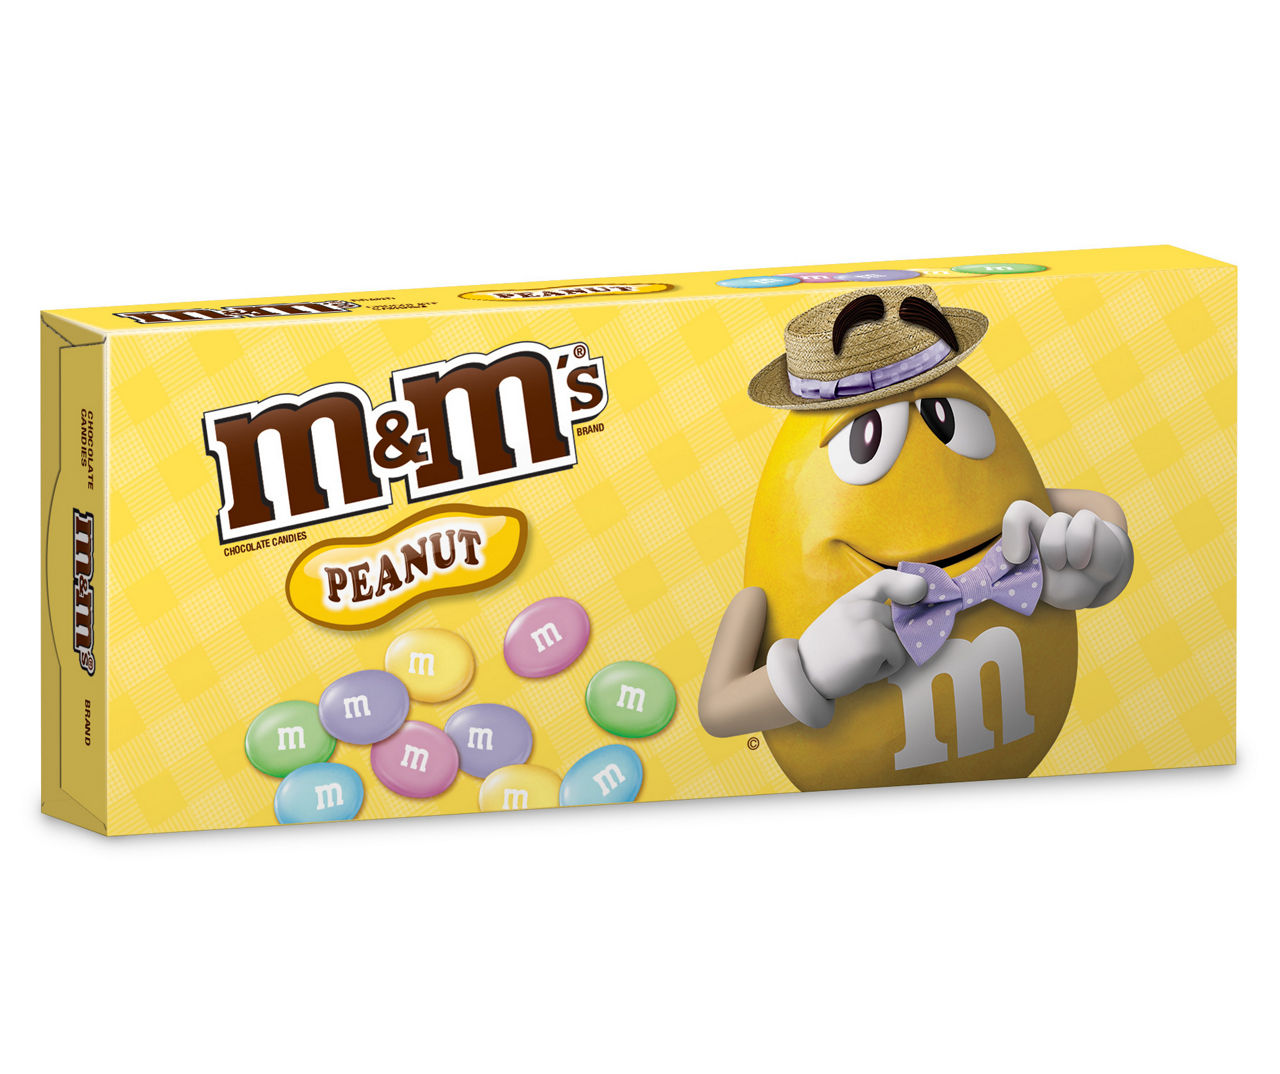 Peanut M & M's